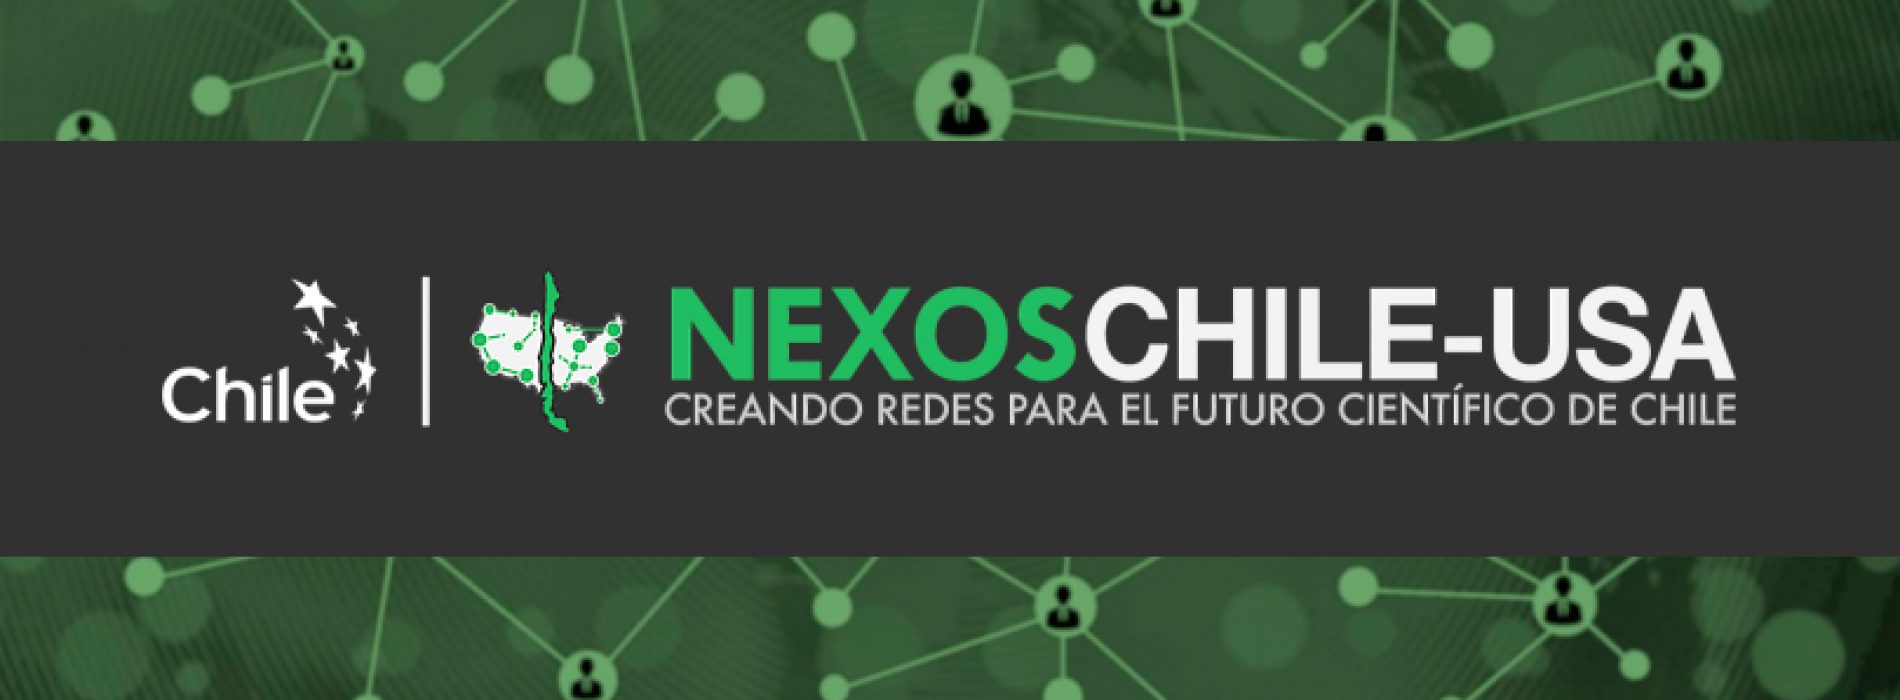 Newsletter Nexos Chile-USA: Enero 2019